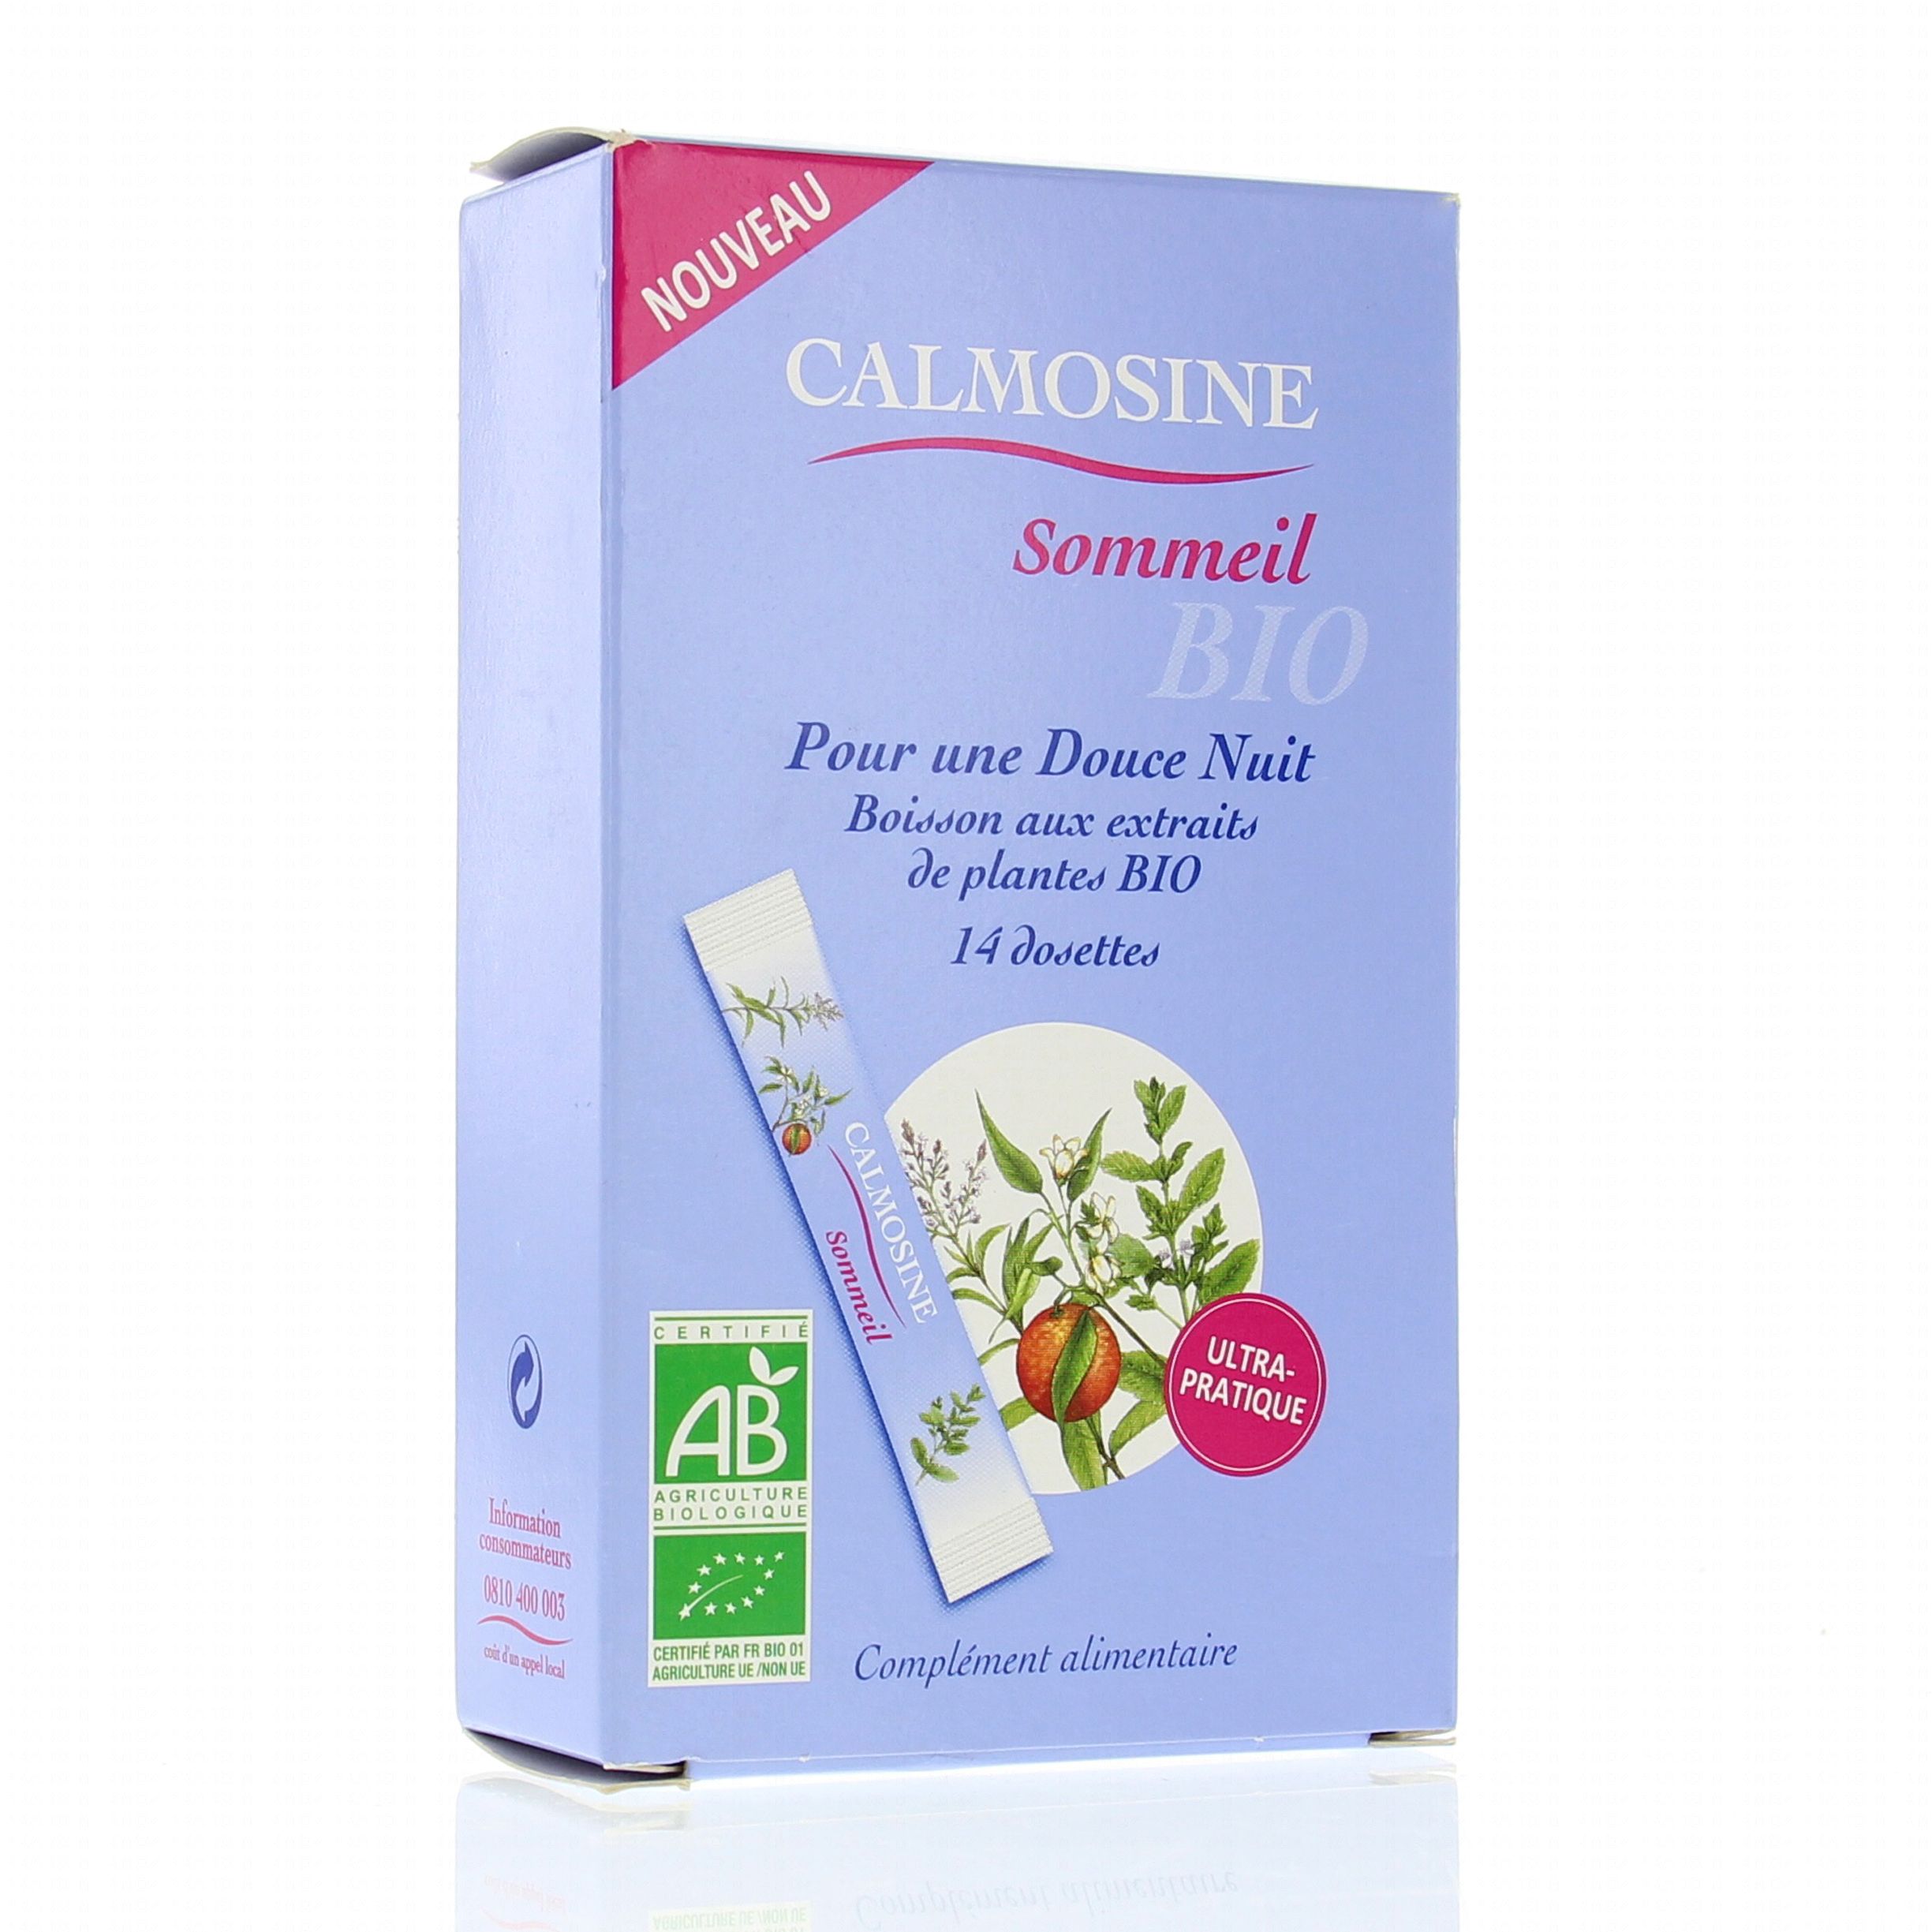 Calmosine Sommeil Bio Boite De 14 Dosettes De 10ml Parapharmacie En Ligne Prado Mermoz